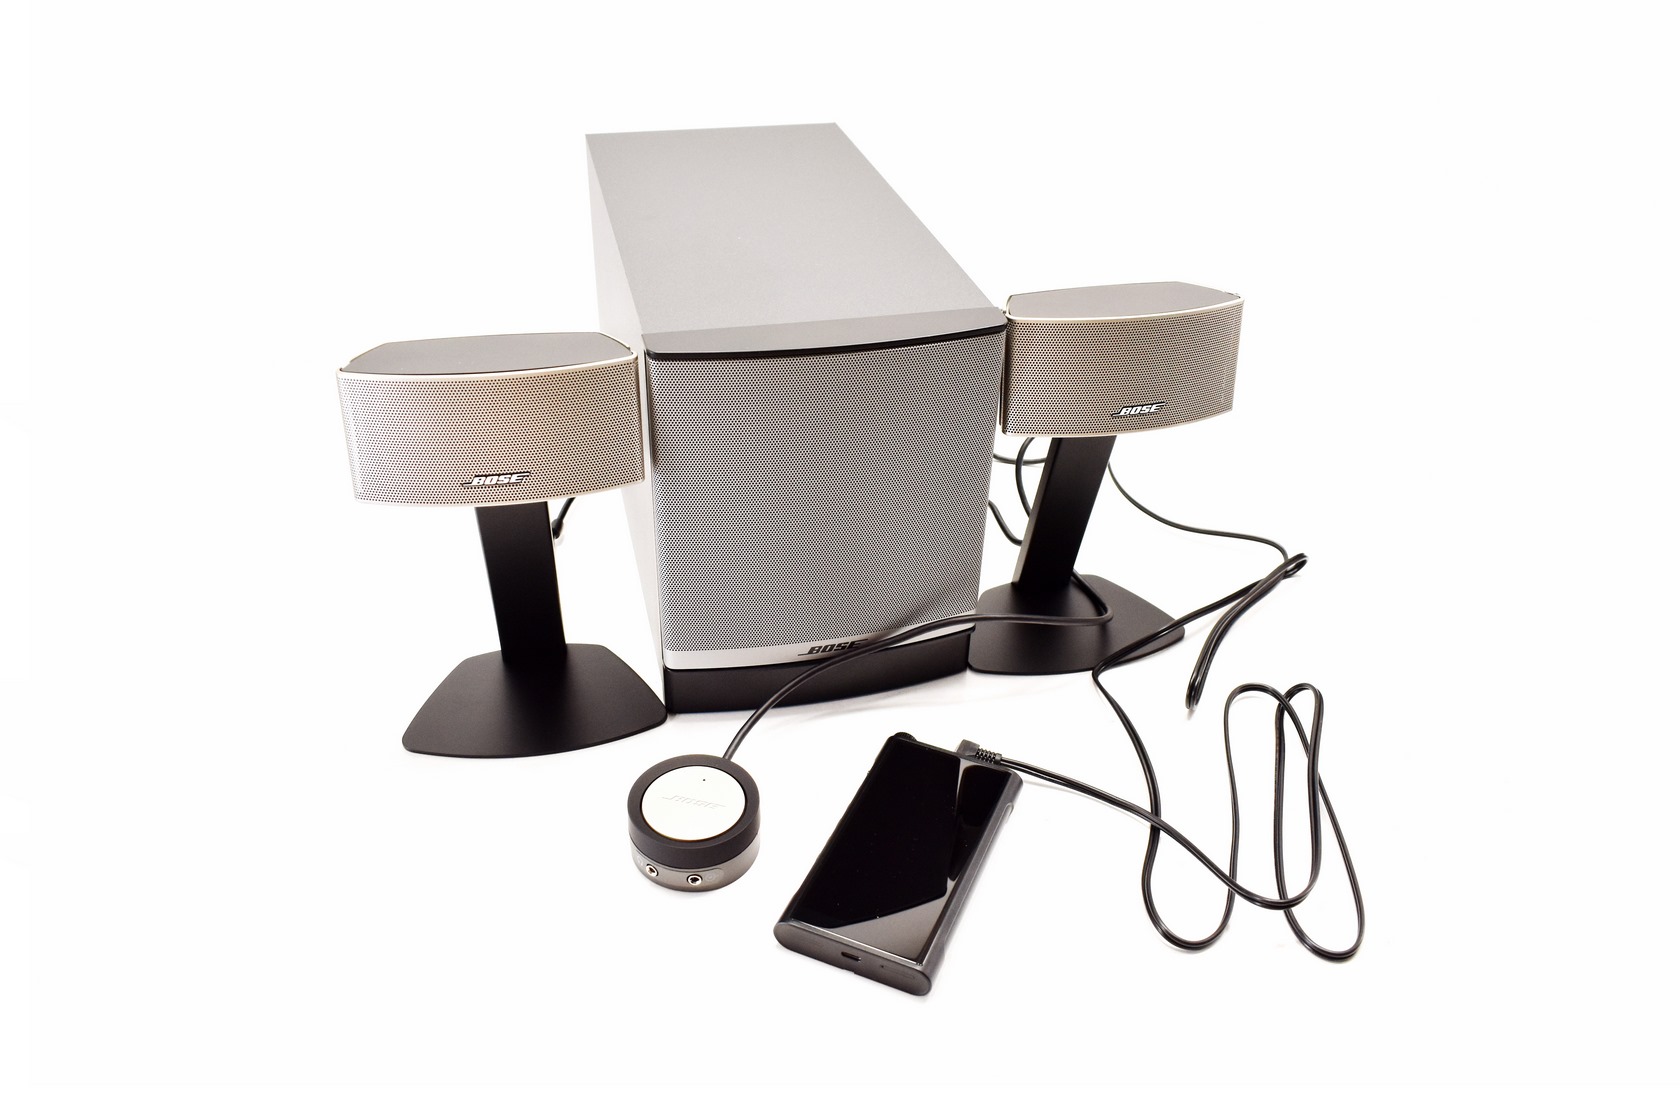 Bose 50 Multimedia Speaker System Review